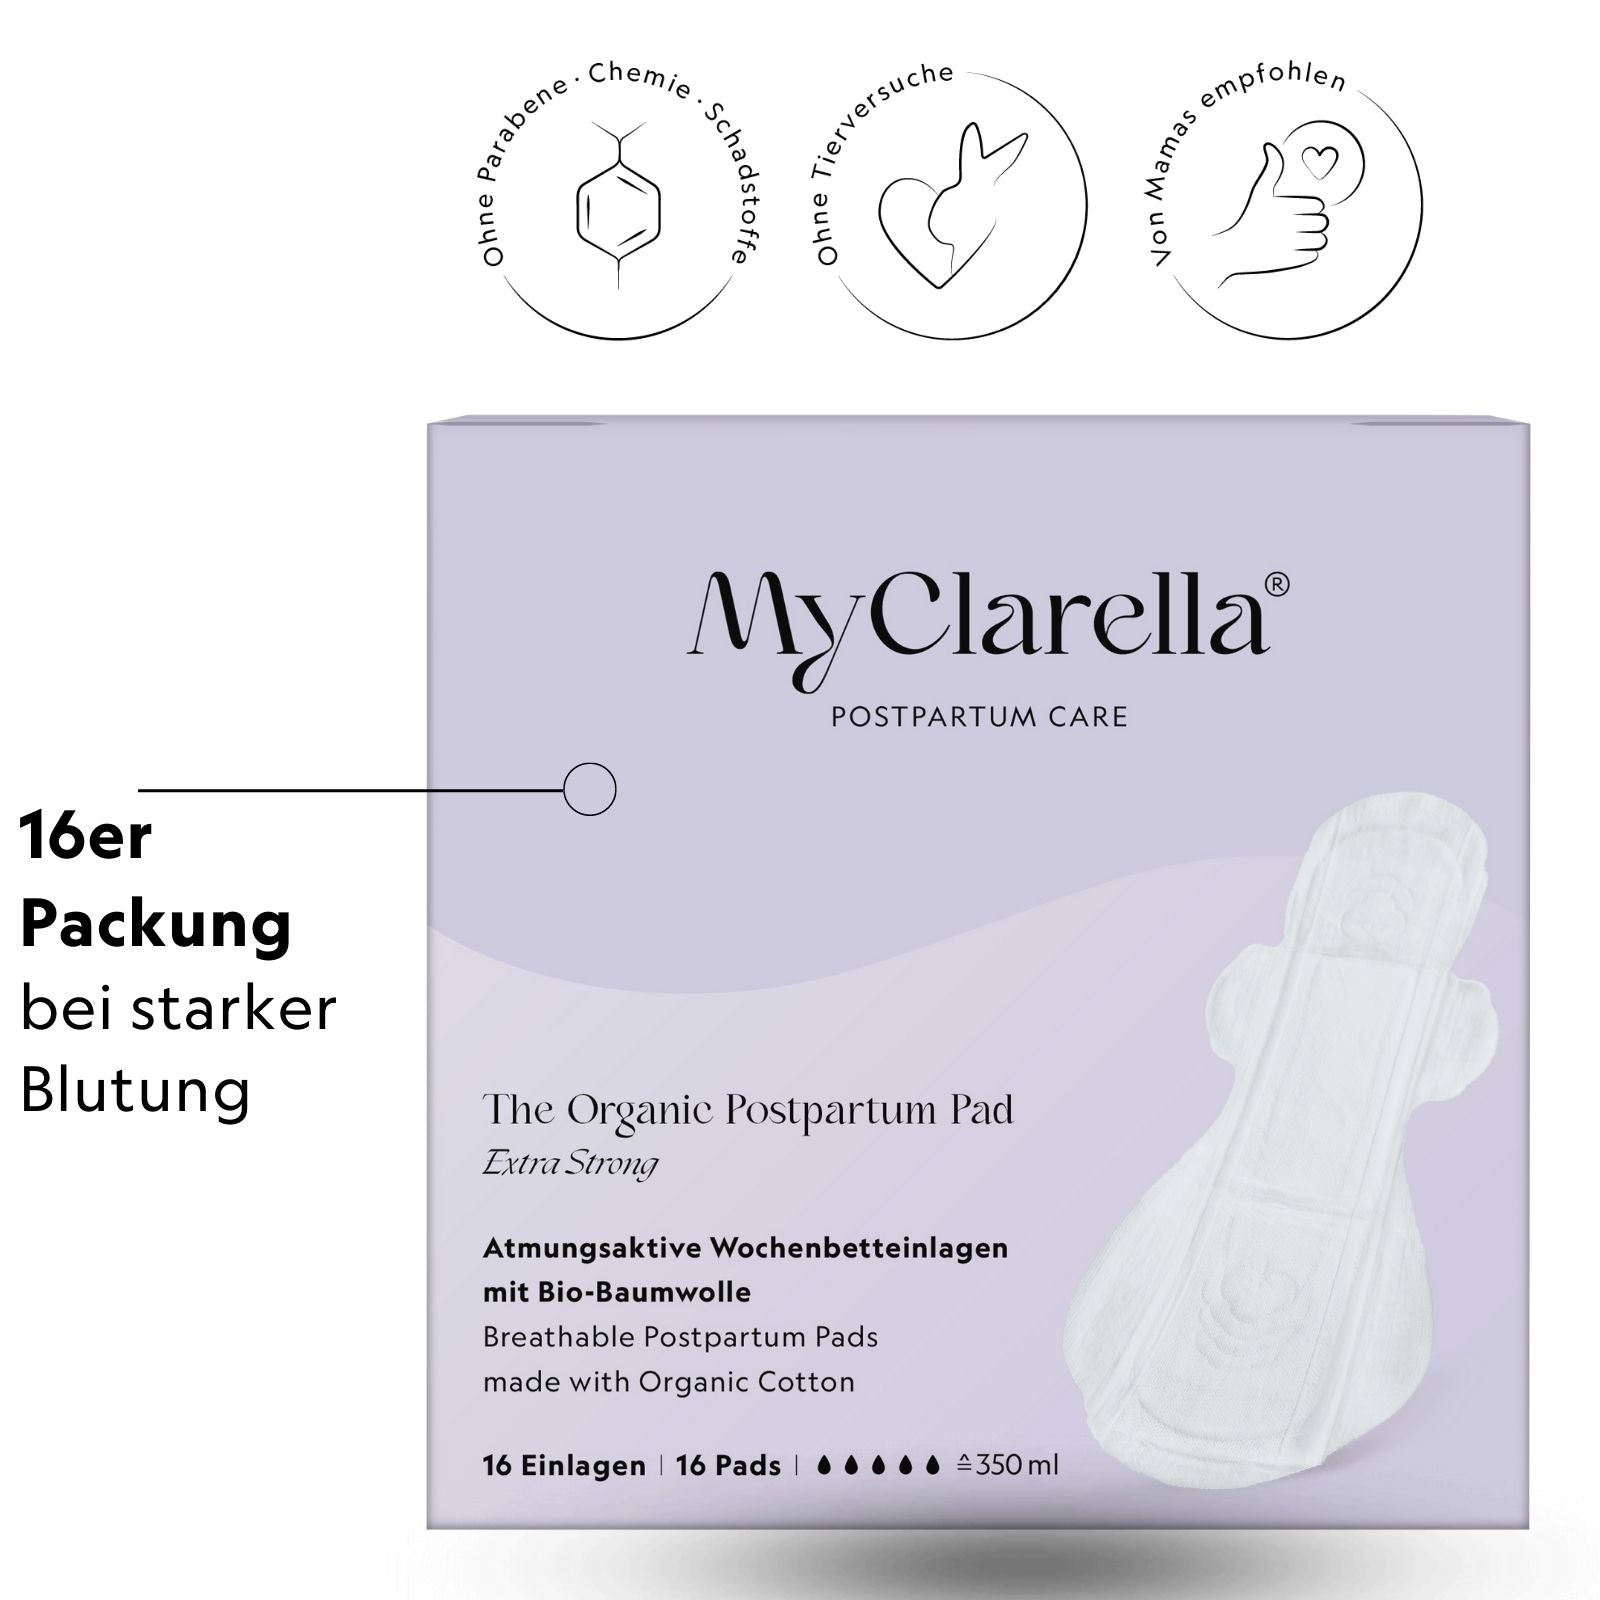 The Organic Postpartum Pad - Extra Strong (16er Pack) - MyClarella